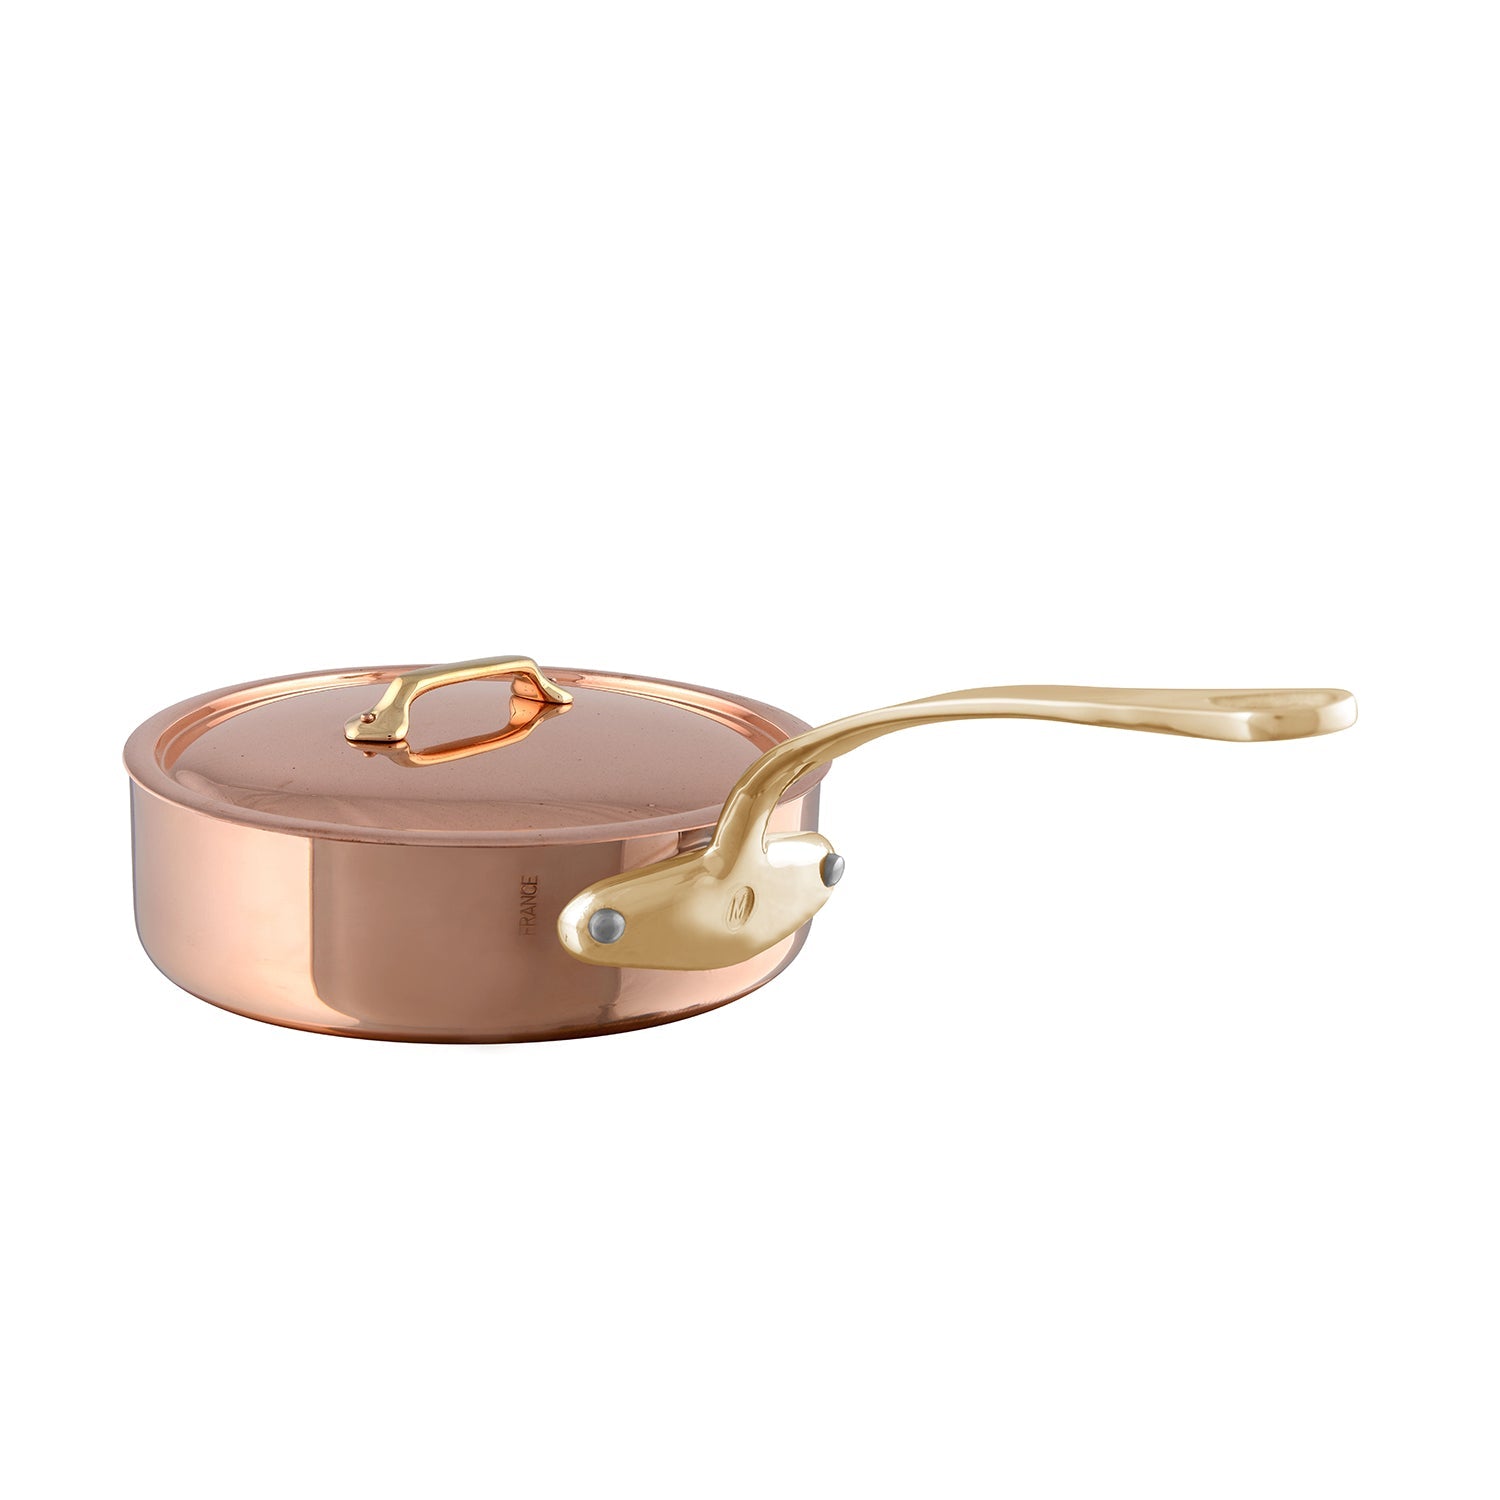 Mauviel 8 Saute Pan - Copper Cookware